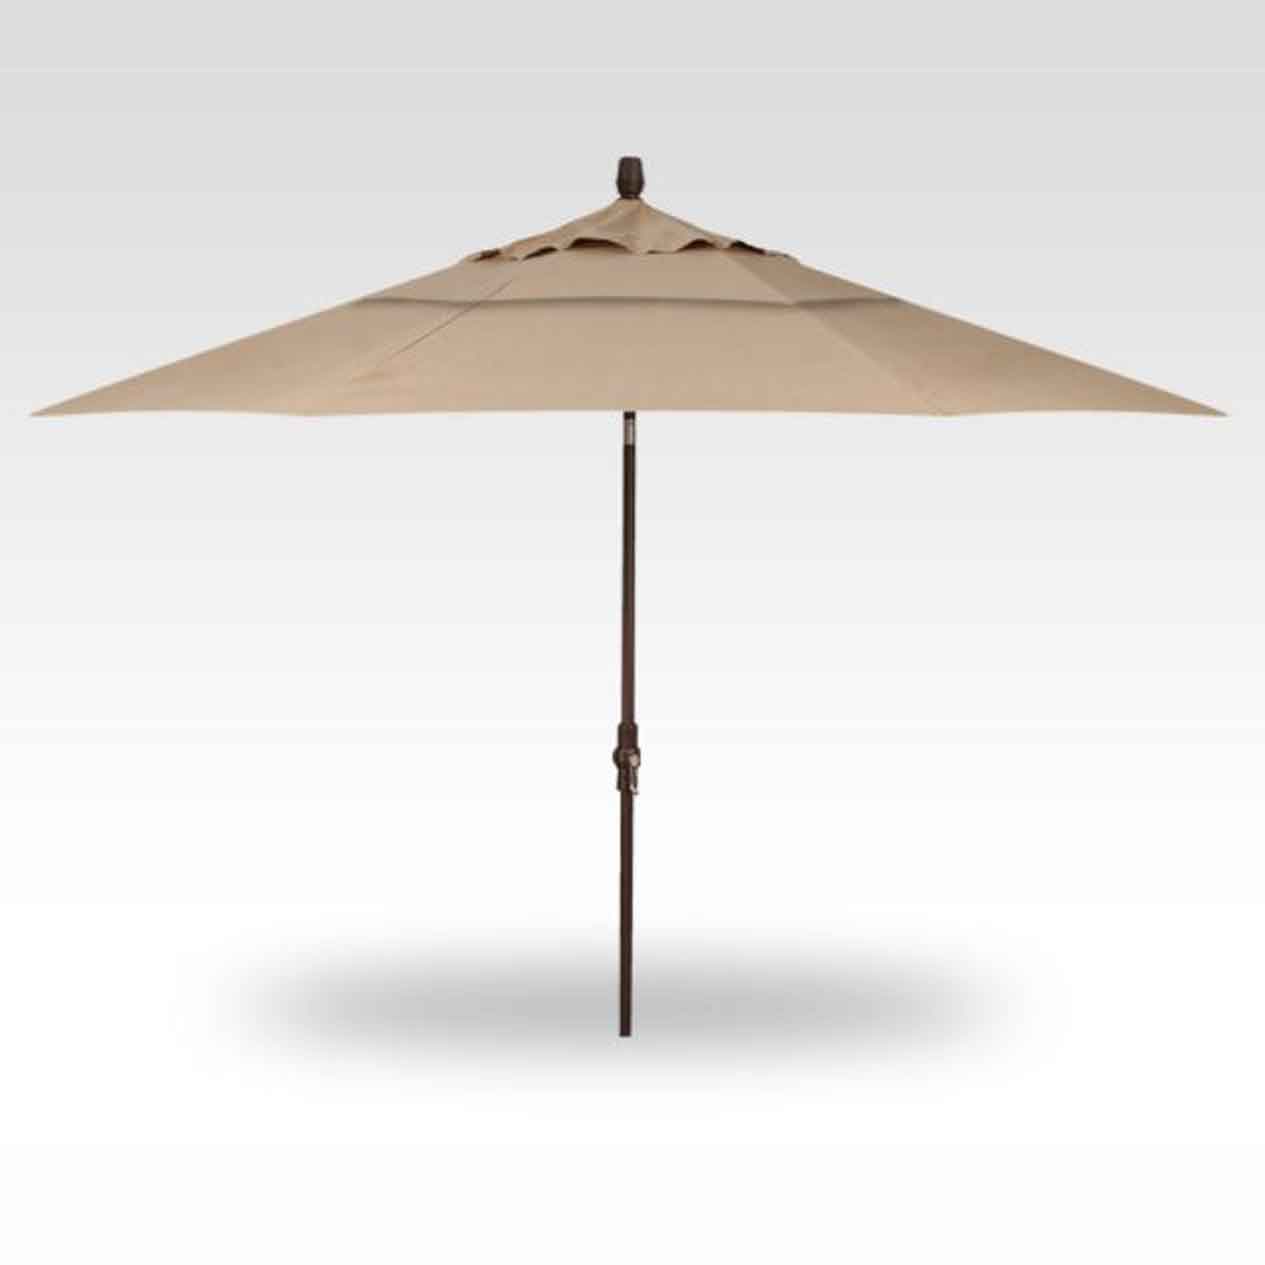 11' Collar Tilt Market Umbrella - Heather Beige